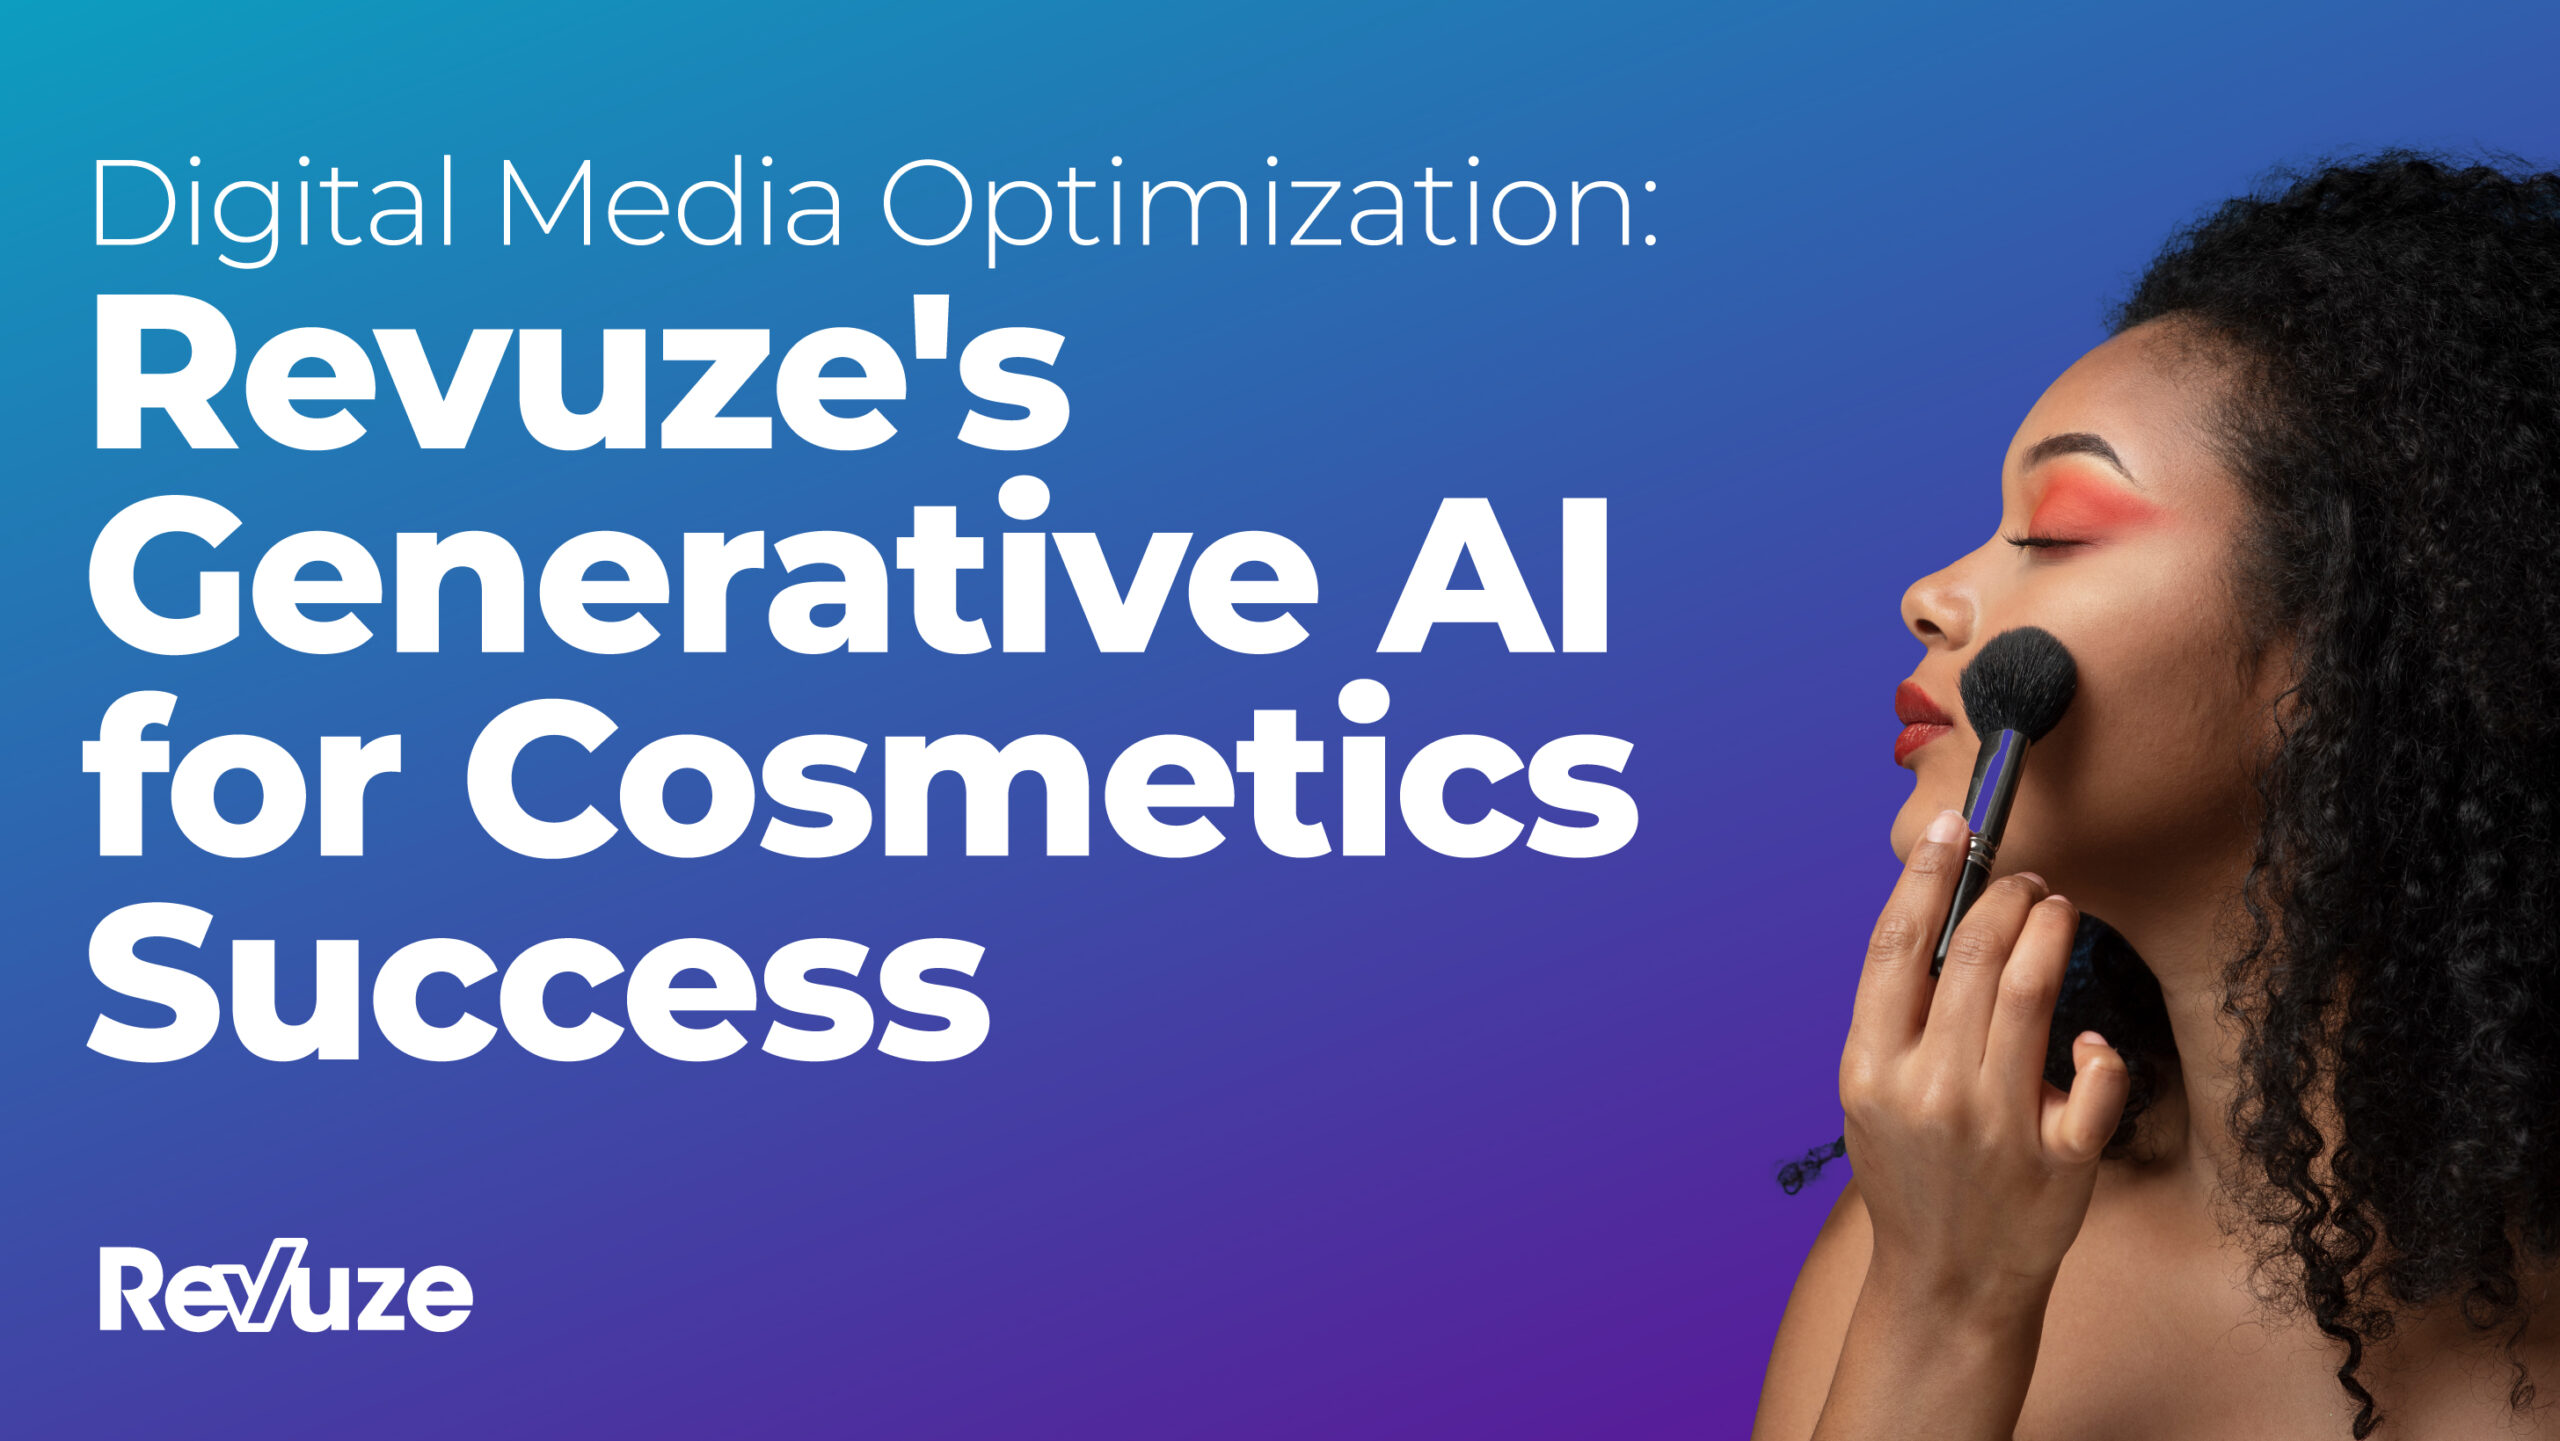 Digital Media Optimization: Revuze’s Generative AI for Cosmetics Success